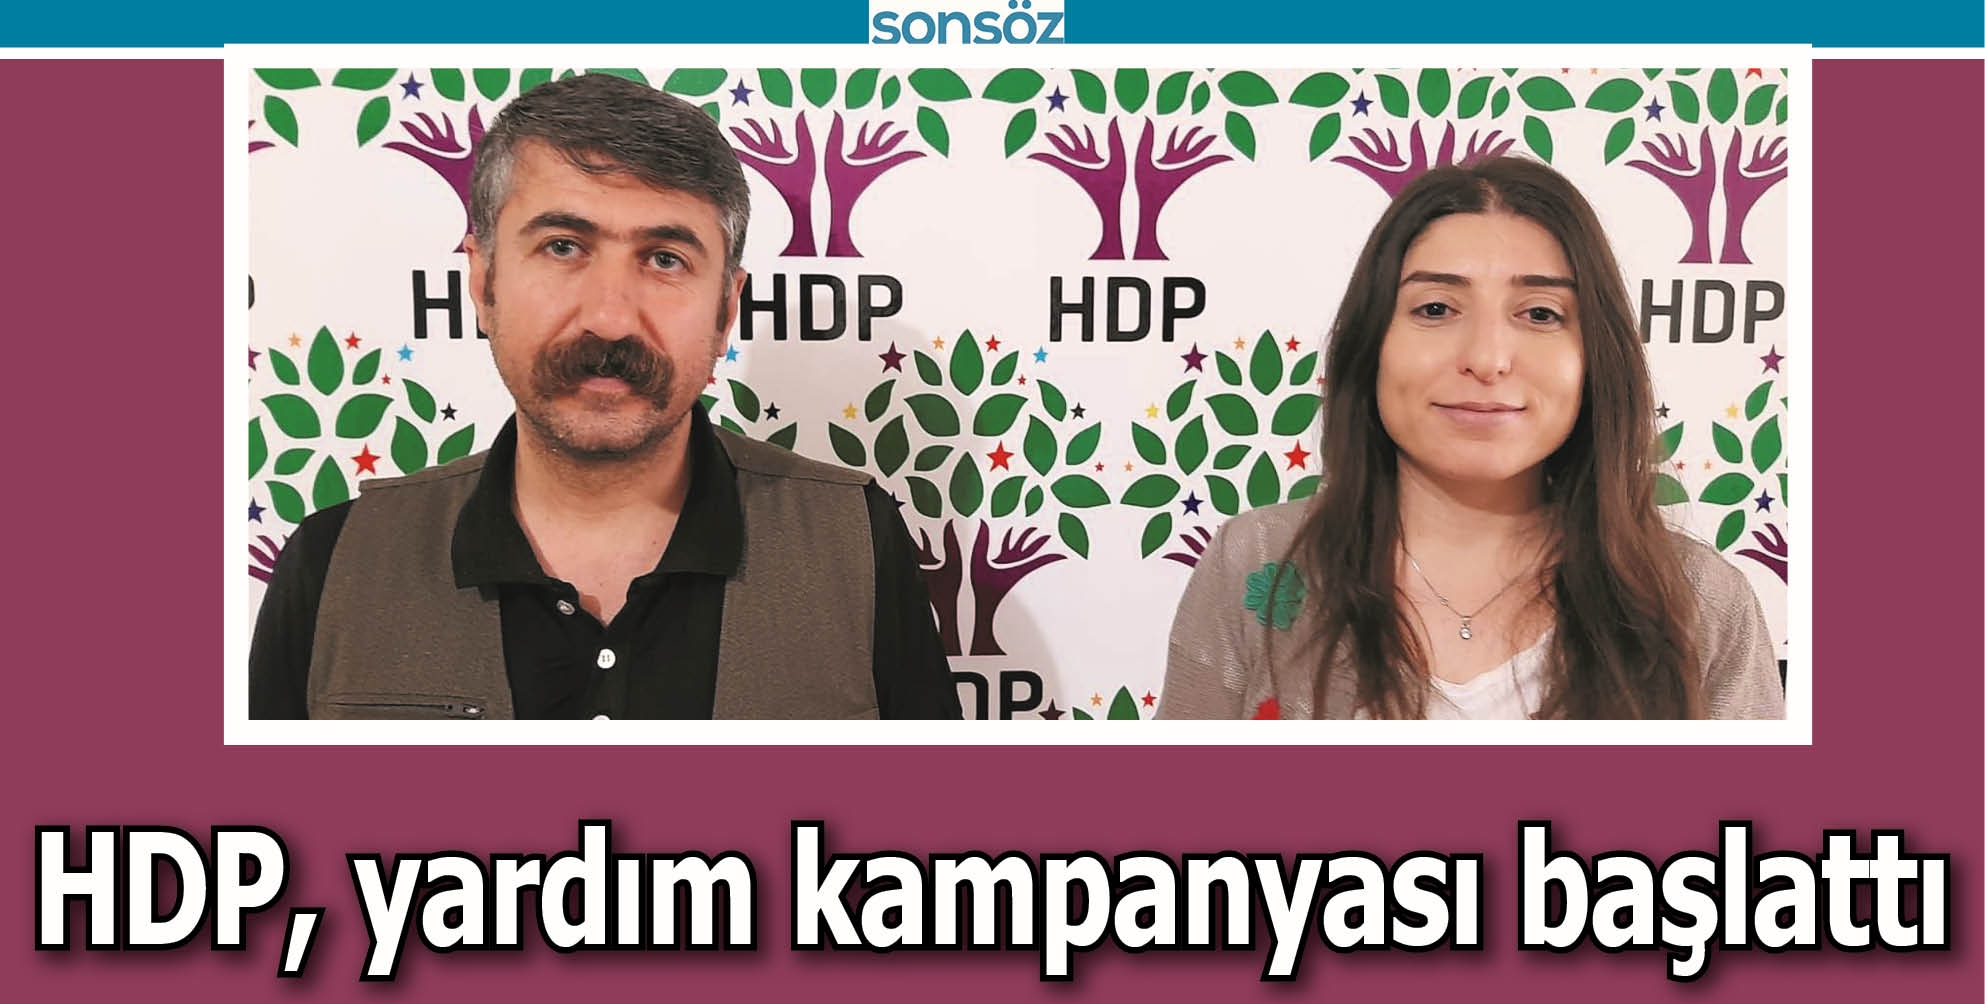 HDP, YARDIM KAMPANYASI BAŞLATTI